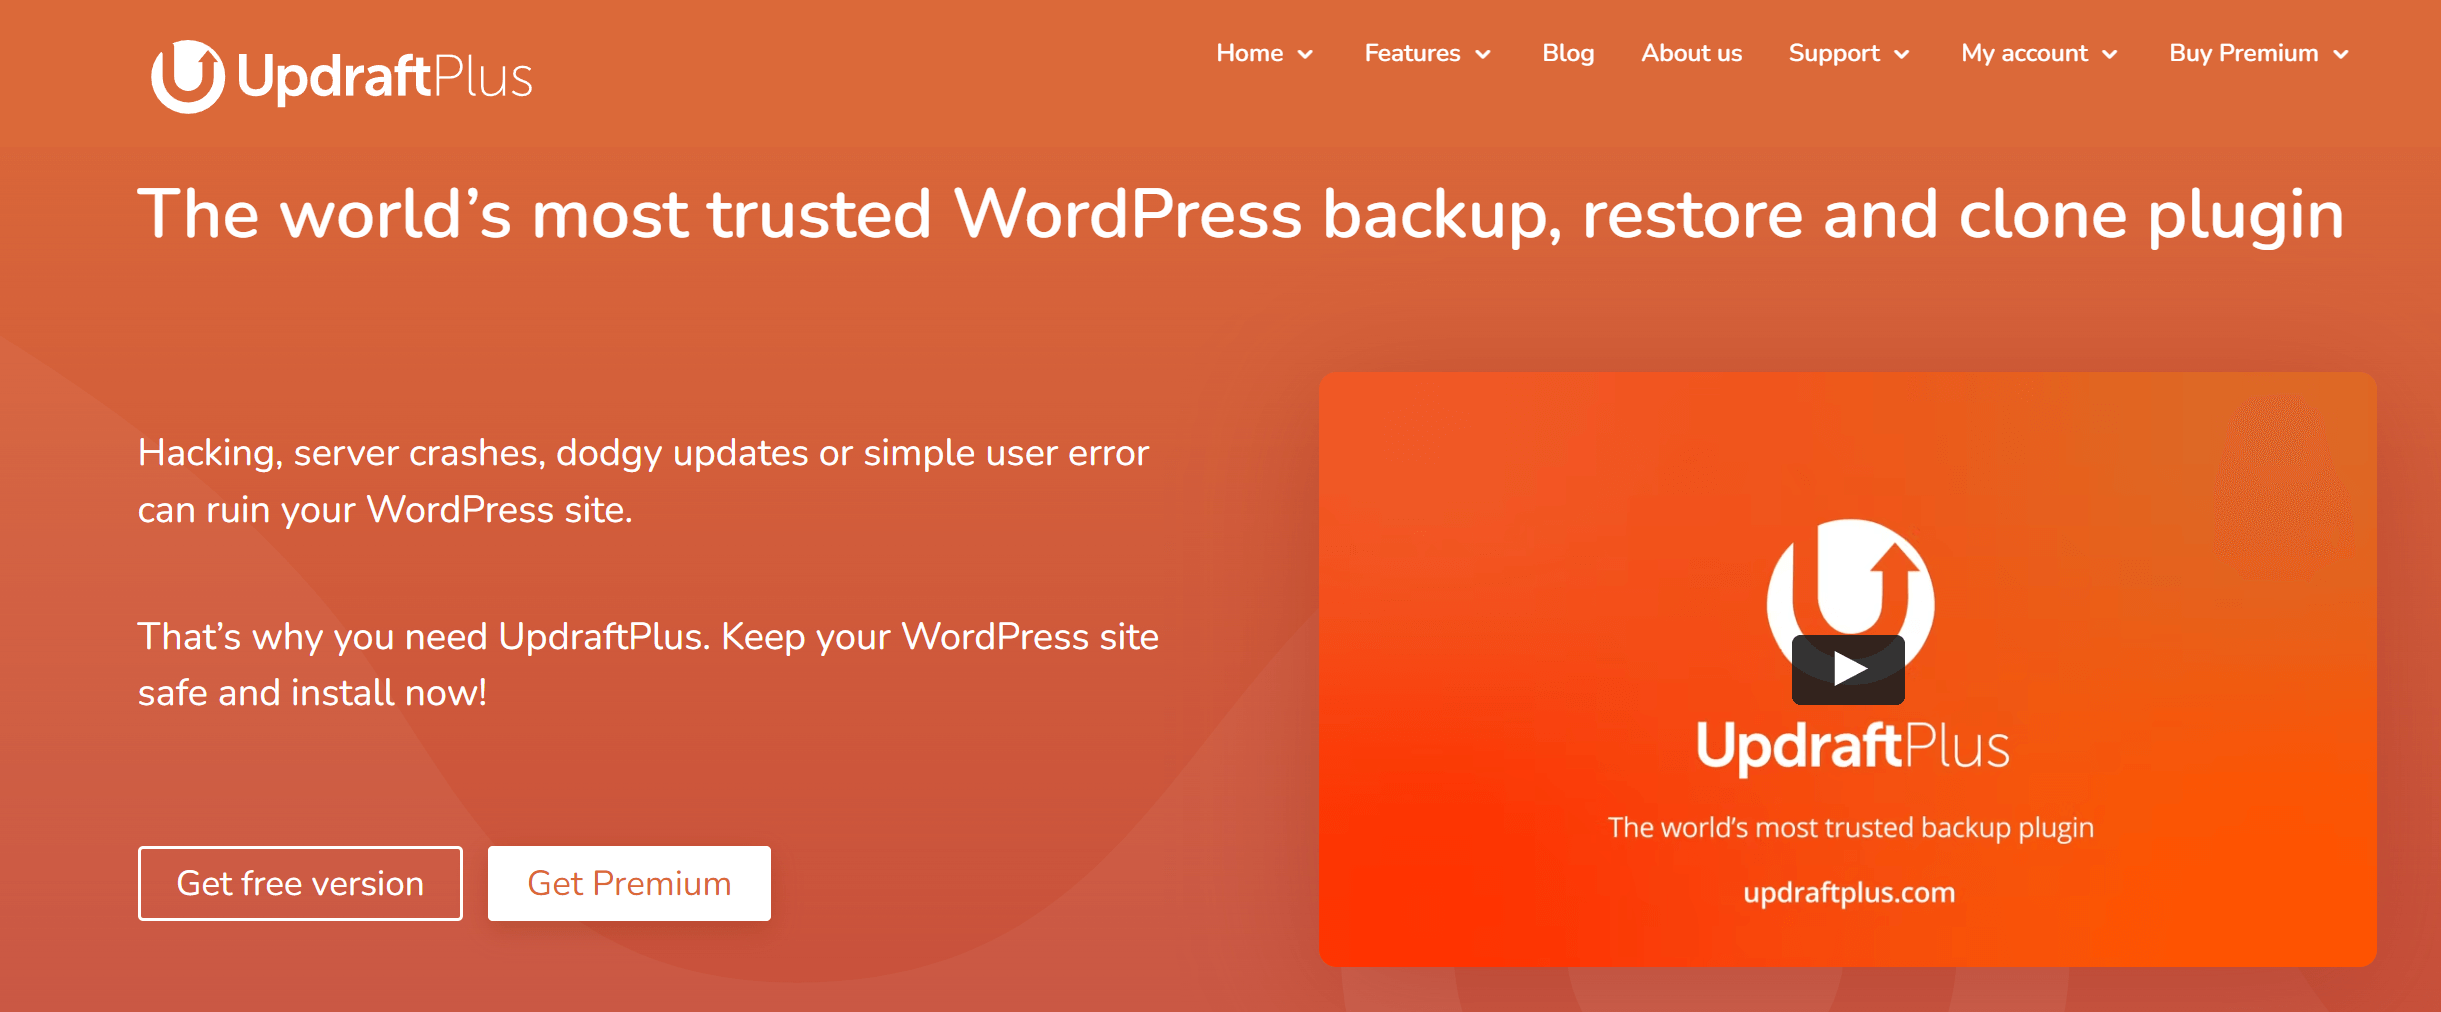 UpdraftPlus backup tool for wordpress